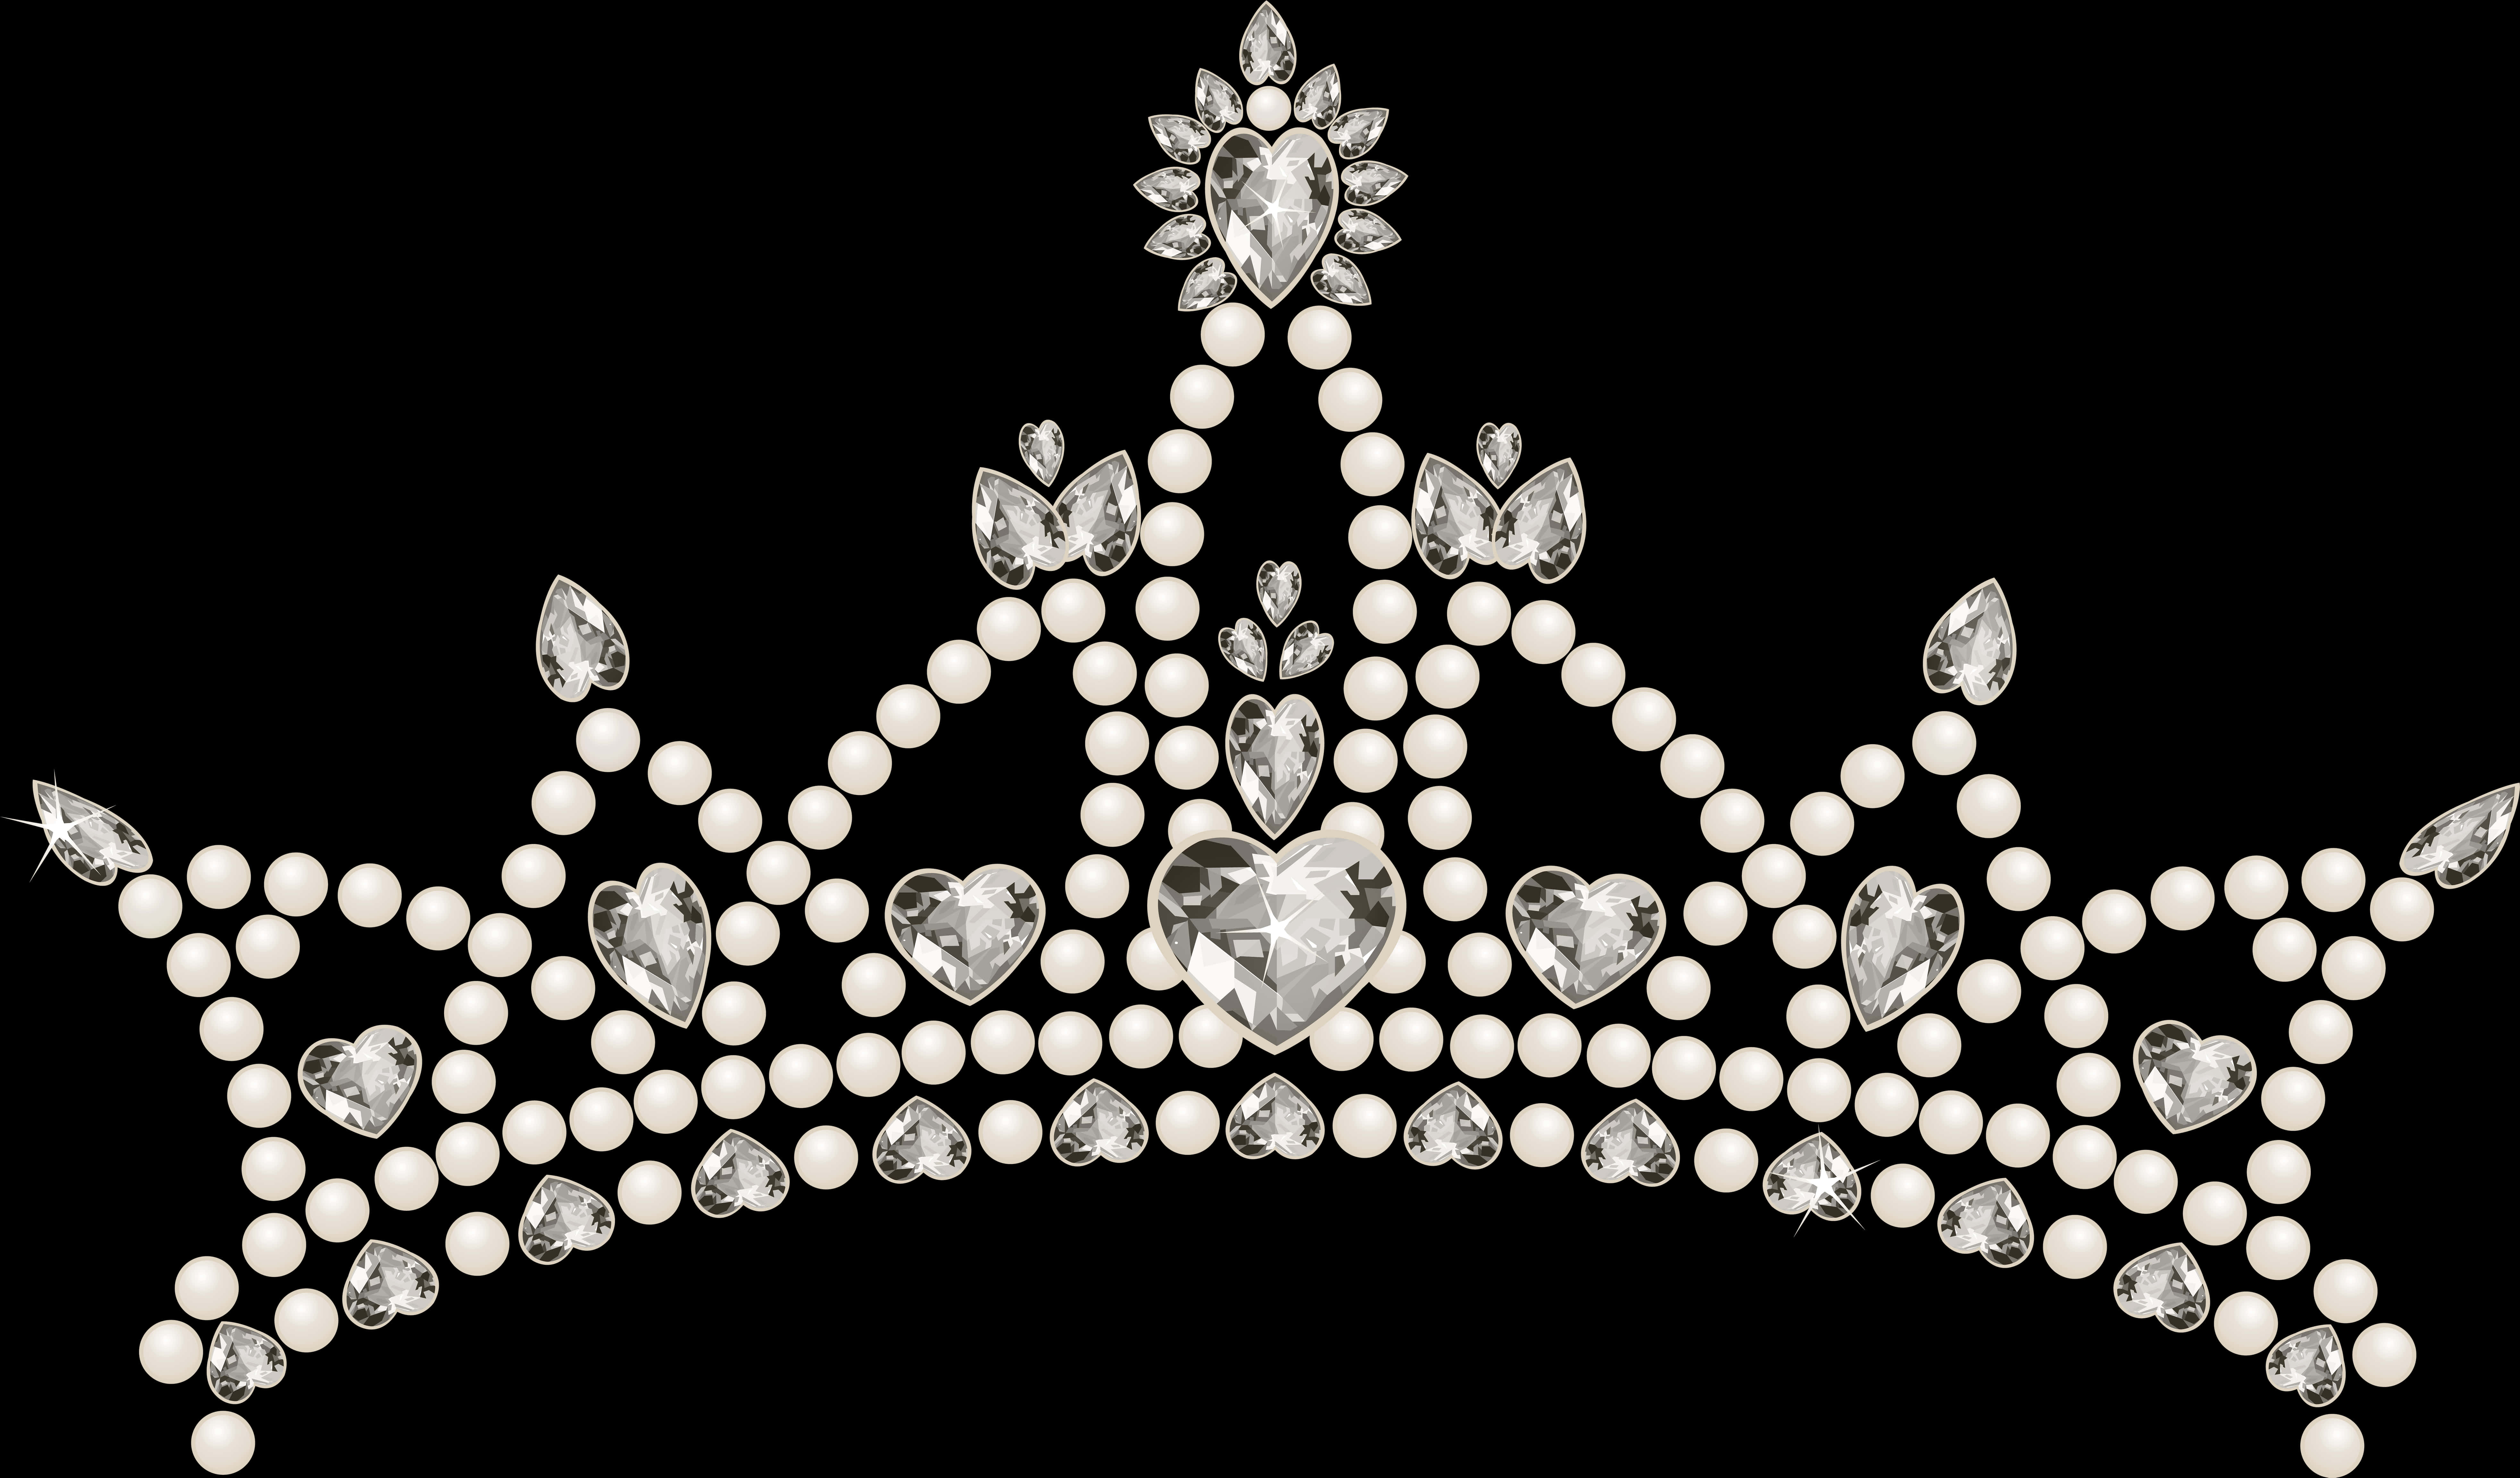 Silver Princess Crown With Rhinestones